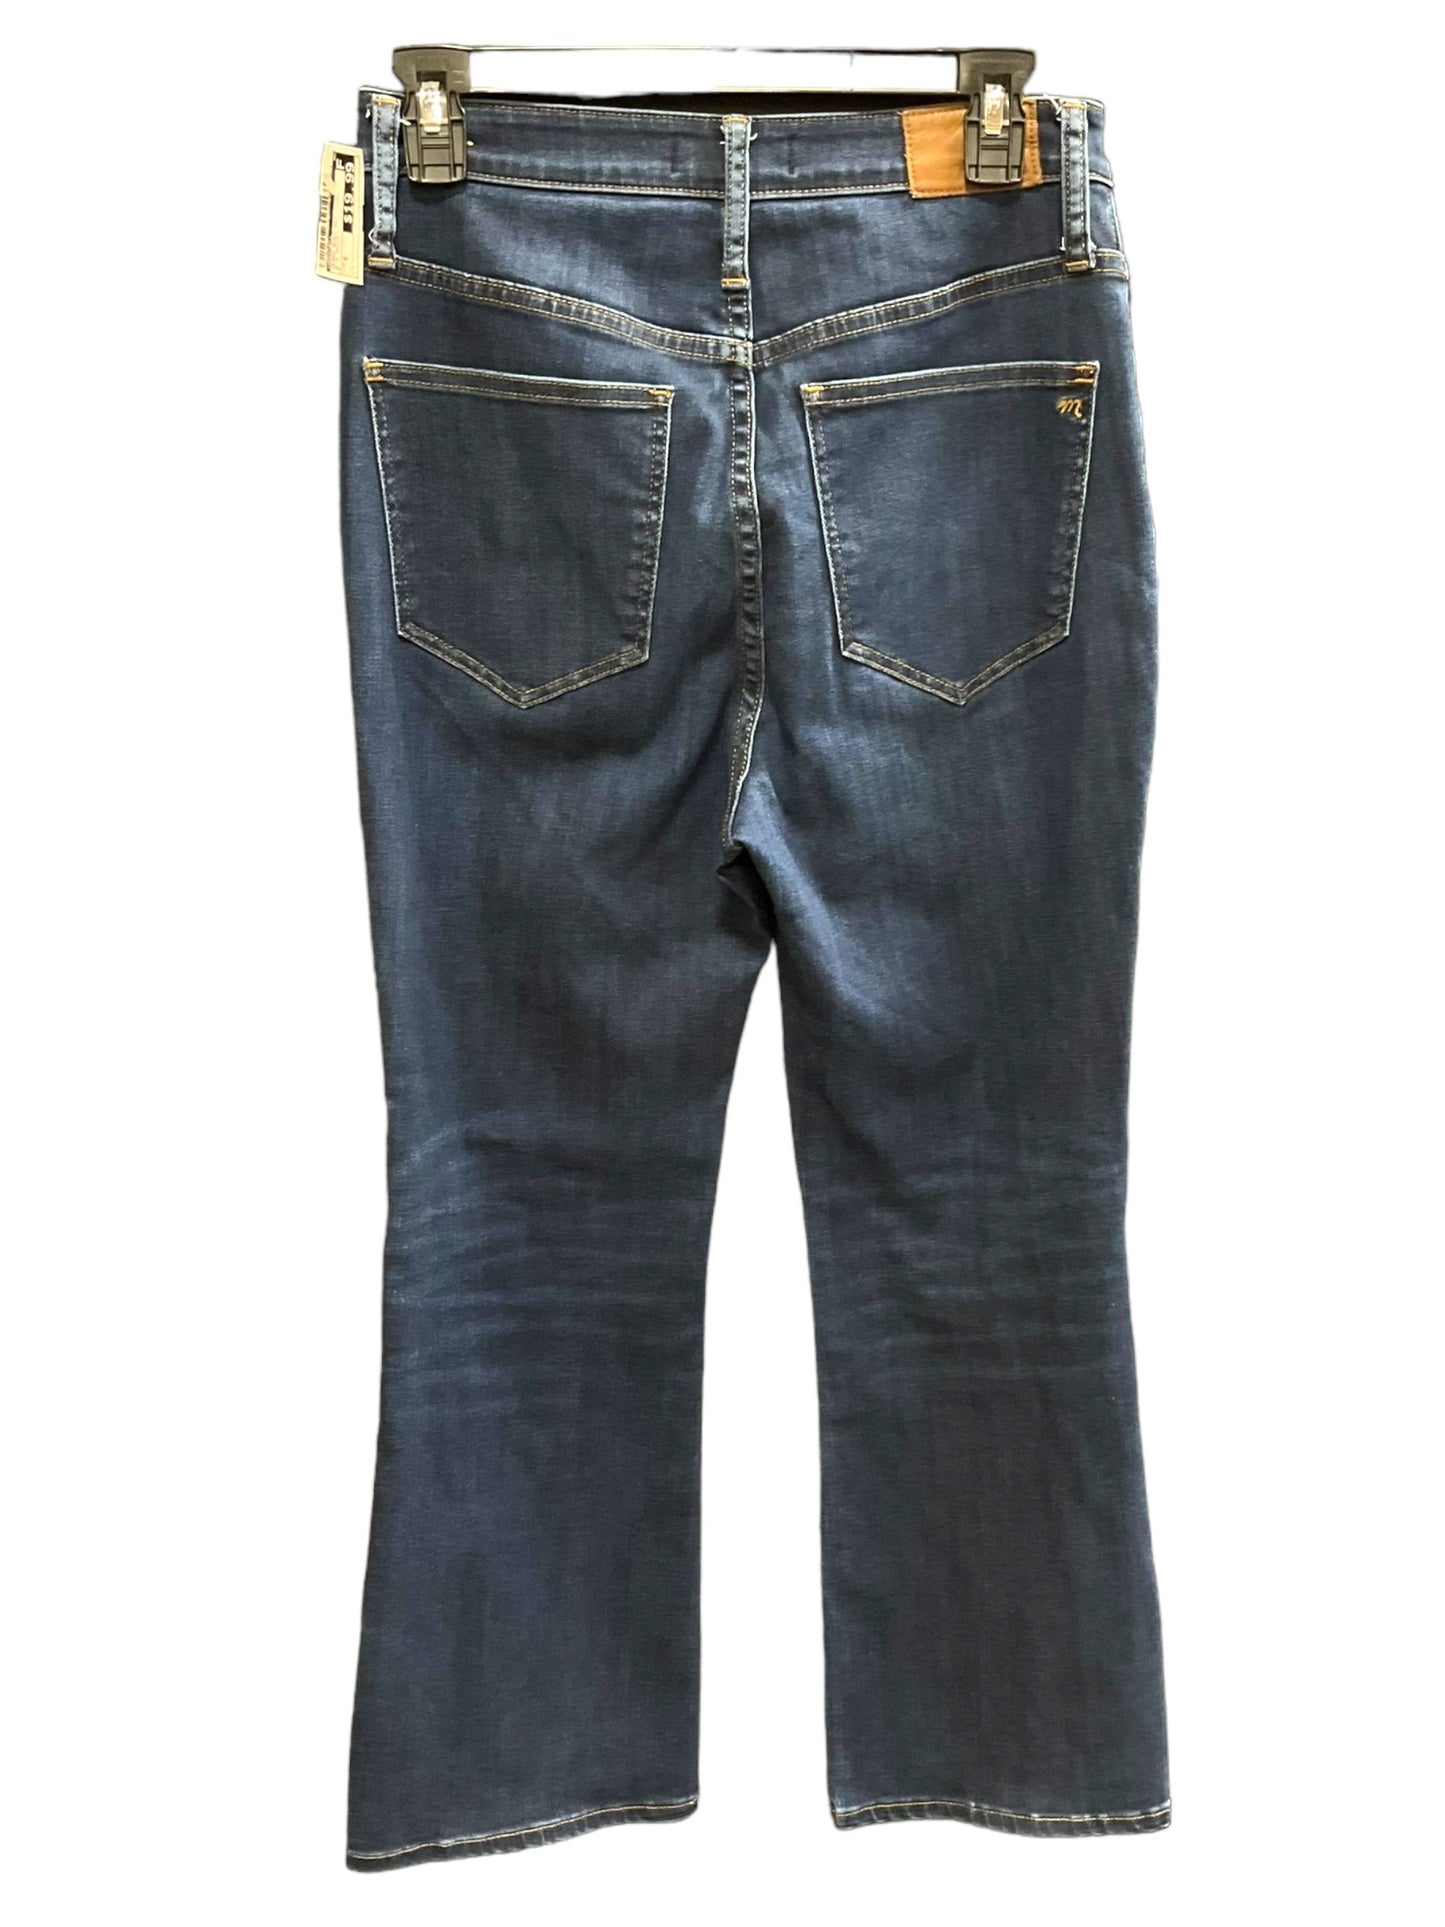 Blue Denim Jeans Boot Cut Madewell, Size 6